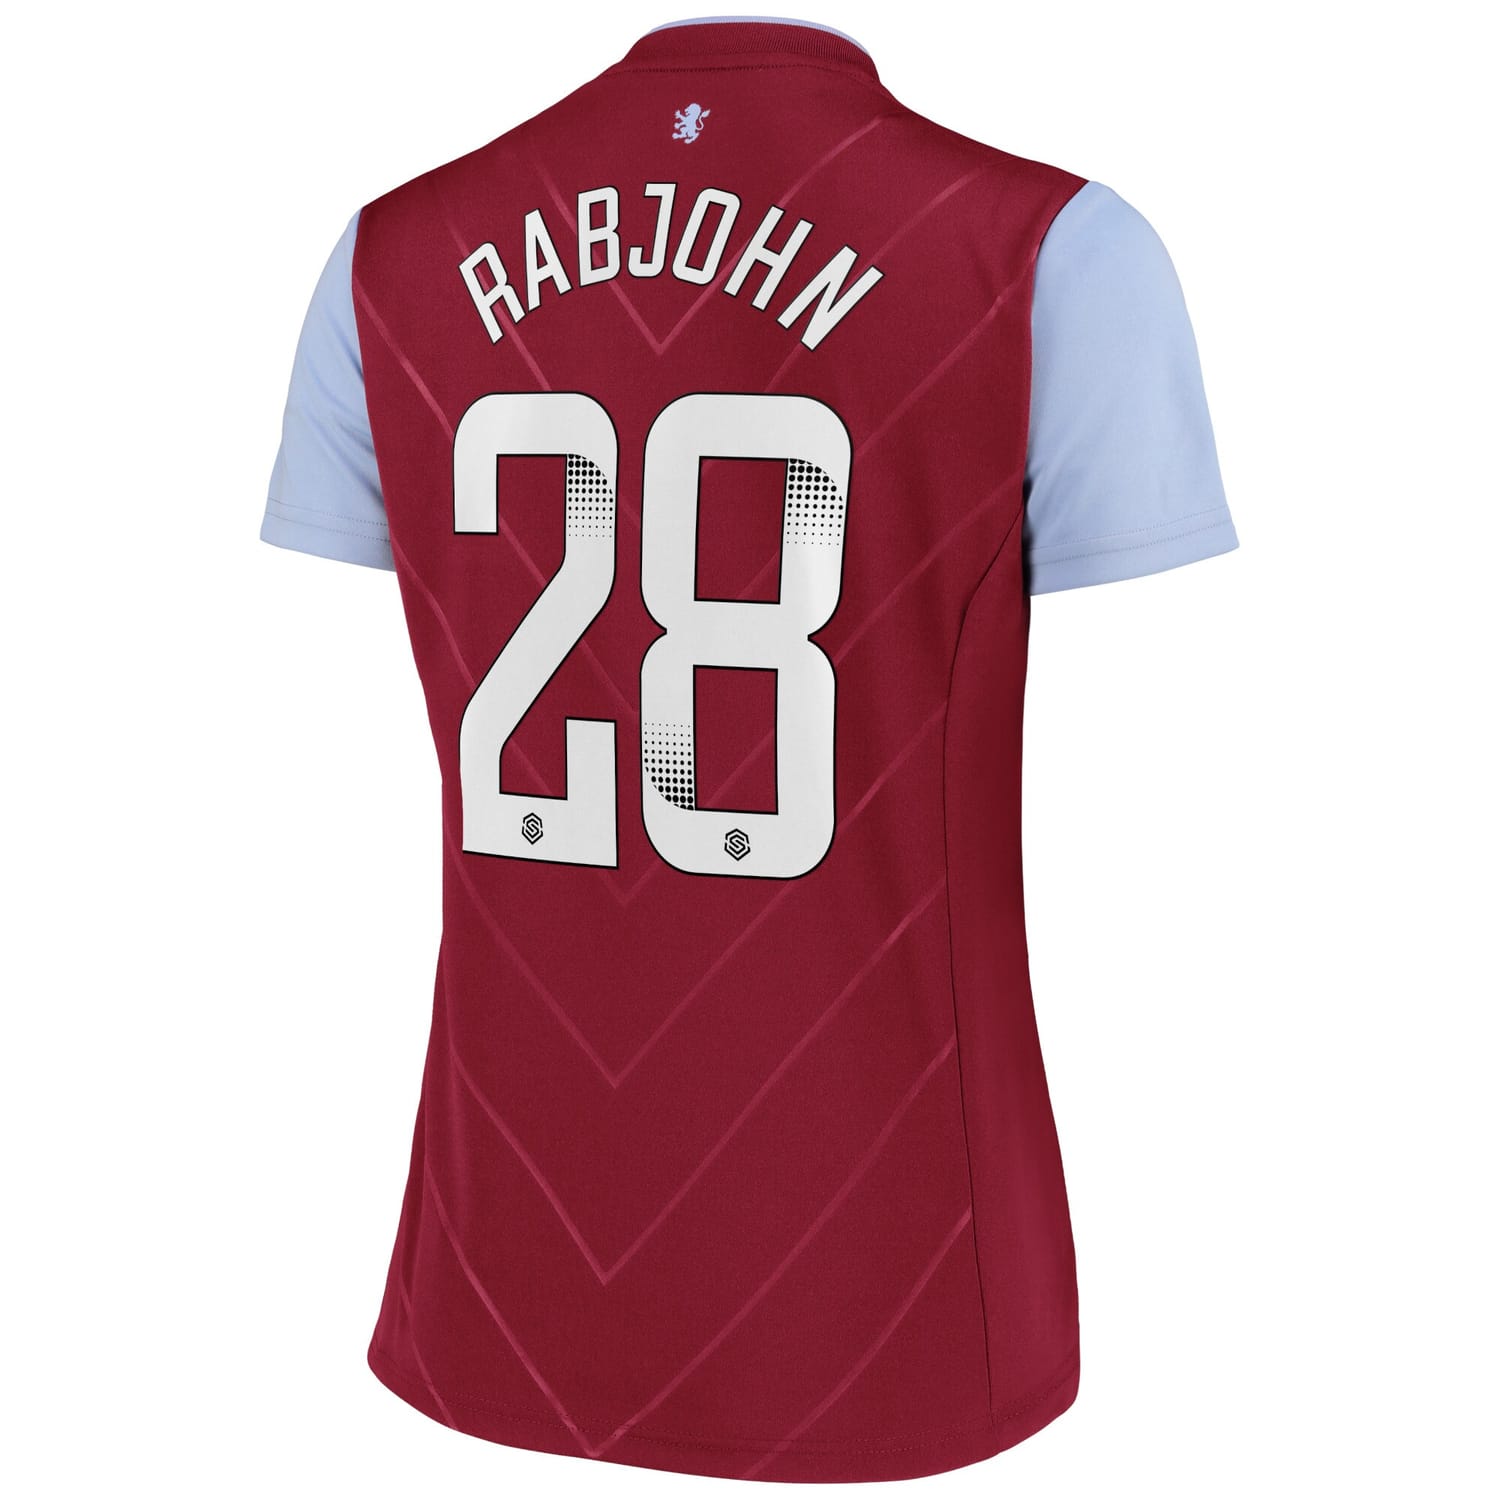 Premier League Aston Villa Home WSL Jersey Shirt 2022-23 player Evie Rabjohn 28 printing for Women